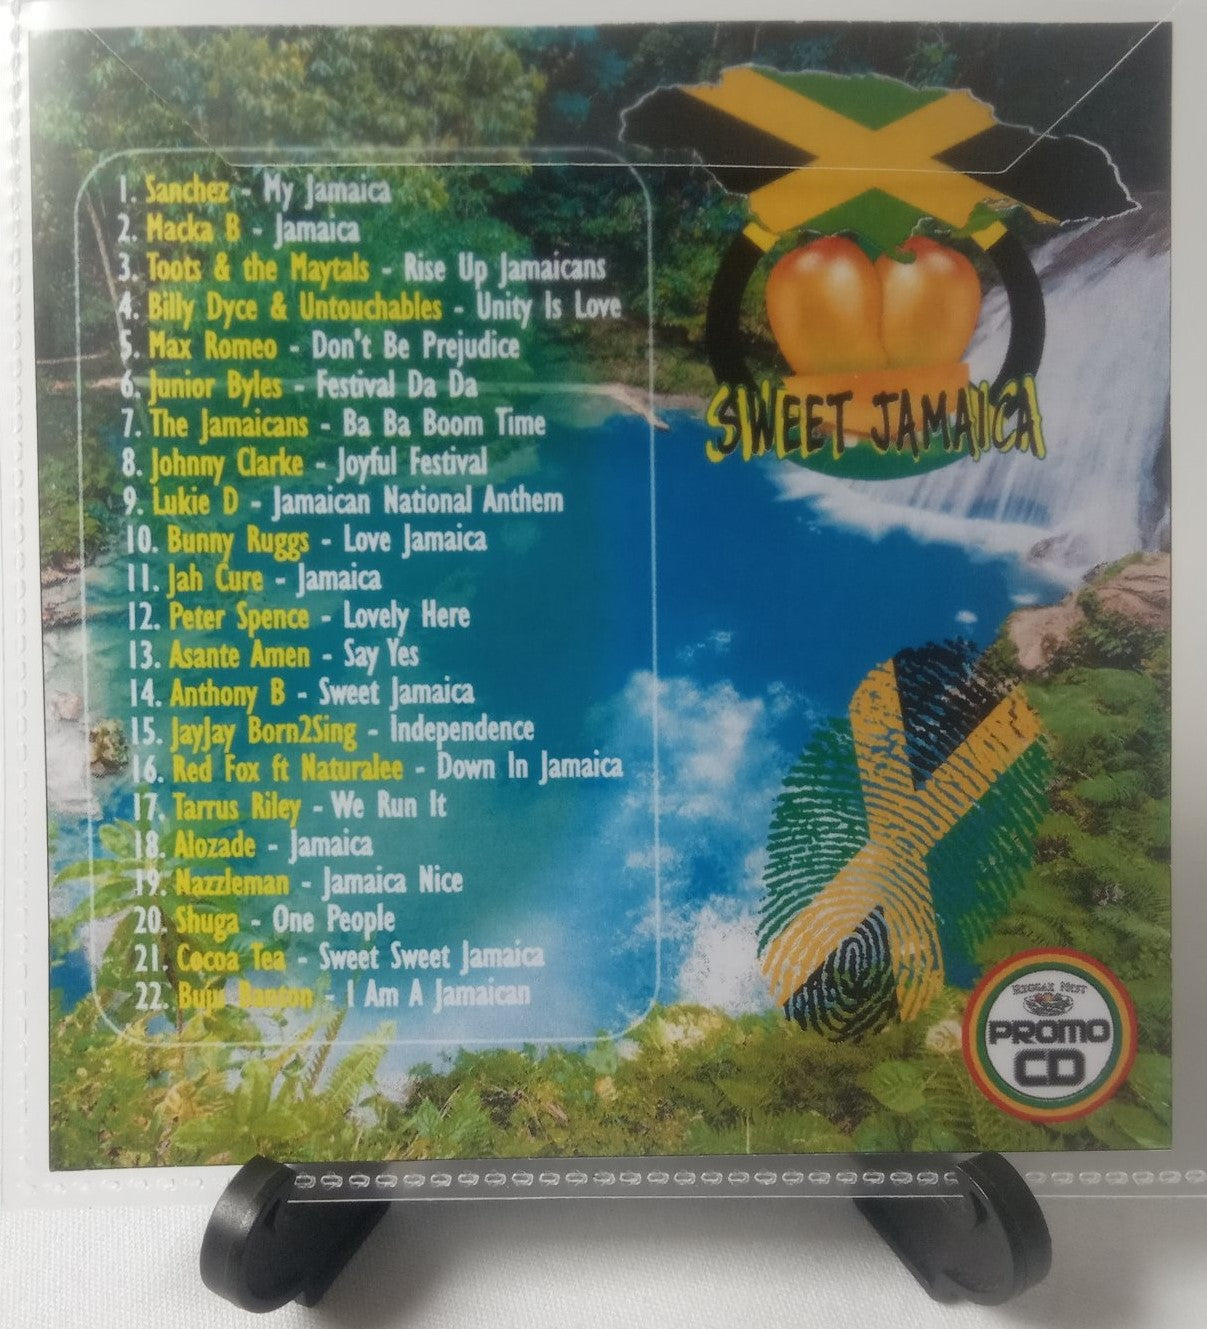 Sweet Jamaica 2 - Various Artists a Reggae CD for all who love Jamaica!! 2020